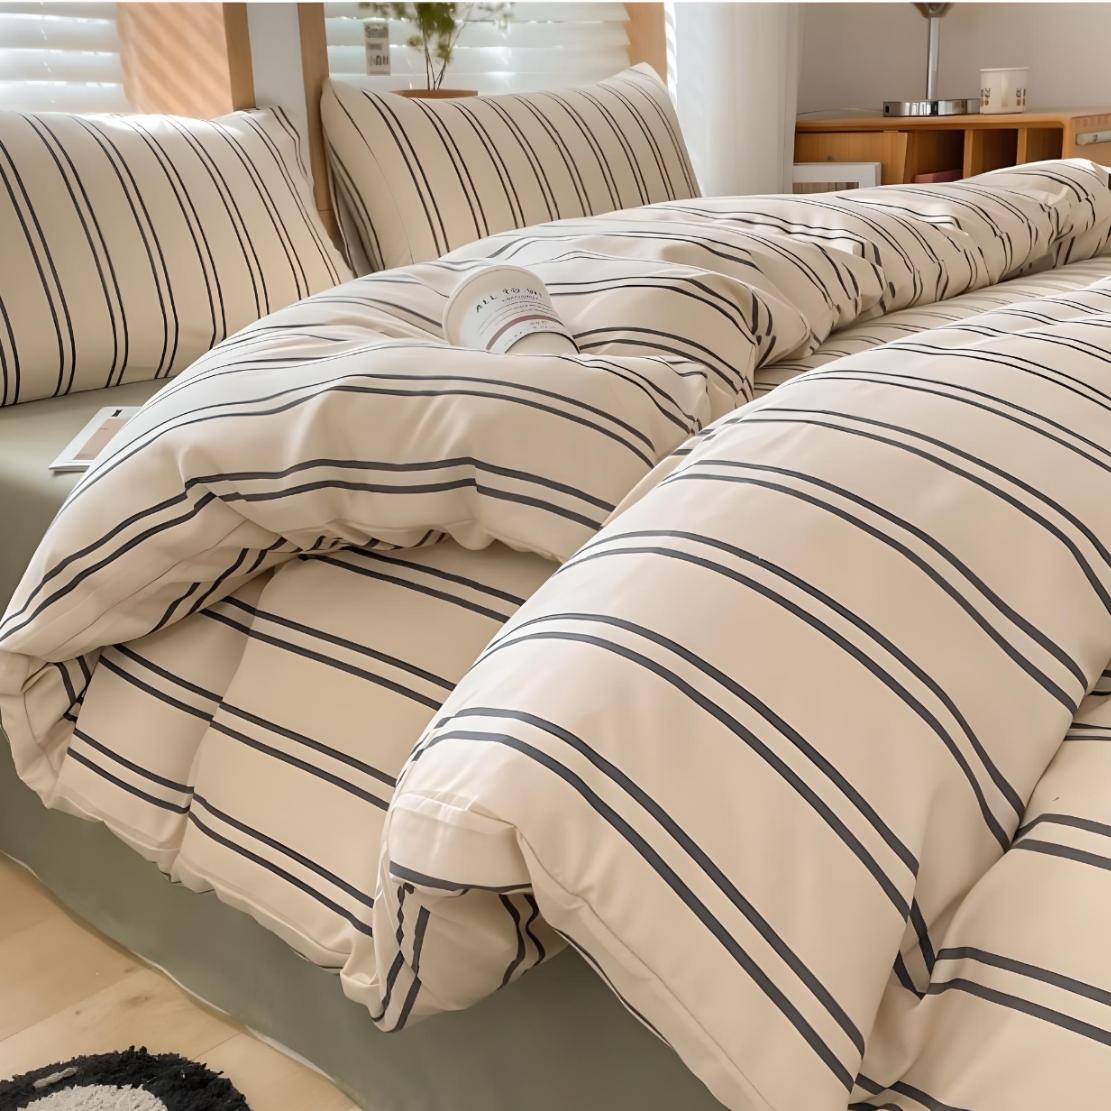 Green & white nordic stripe bedding set